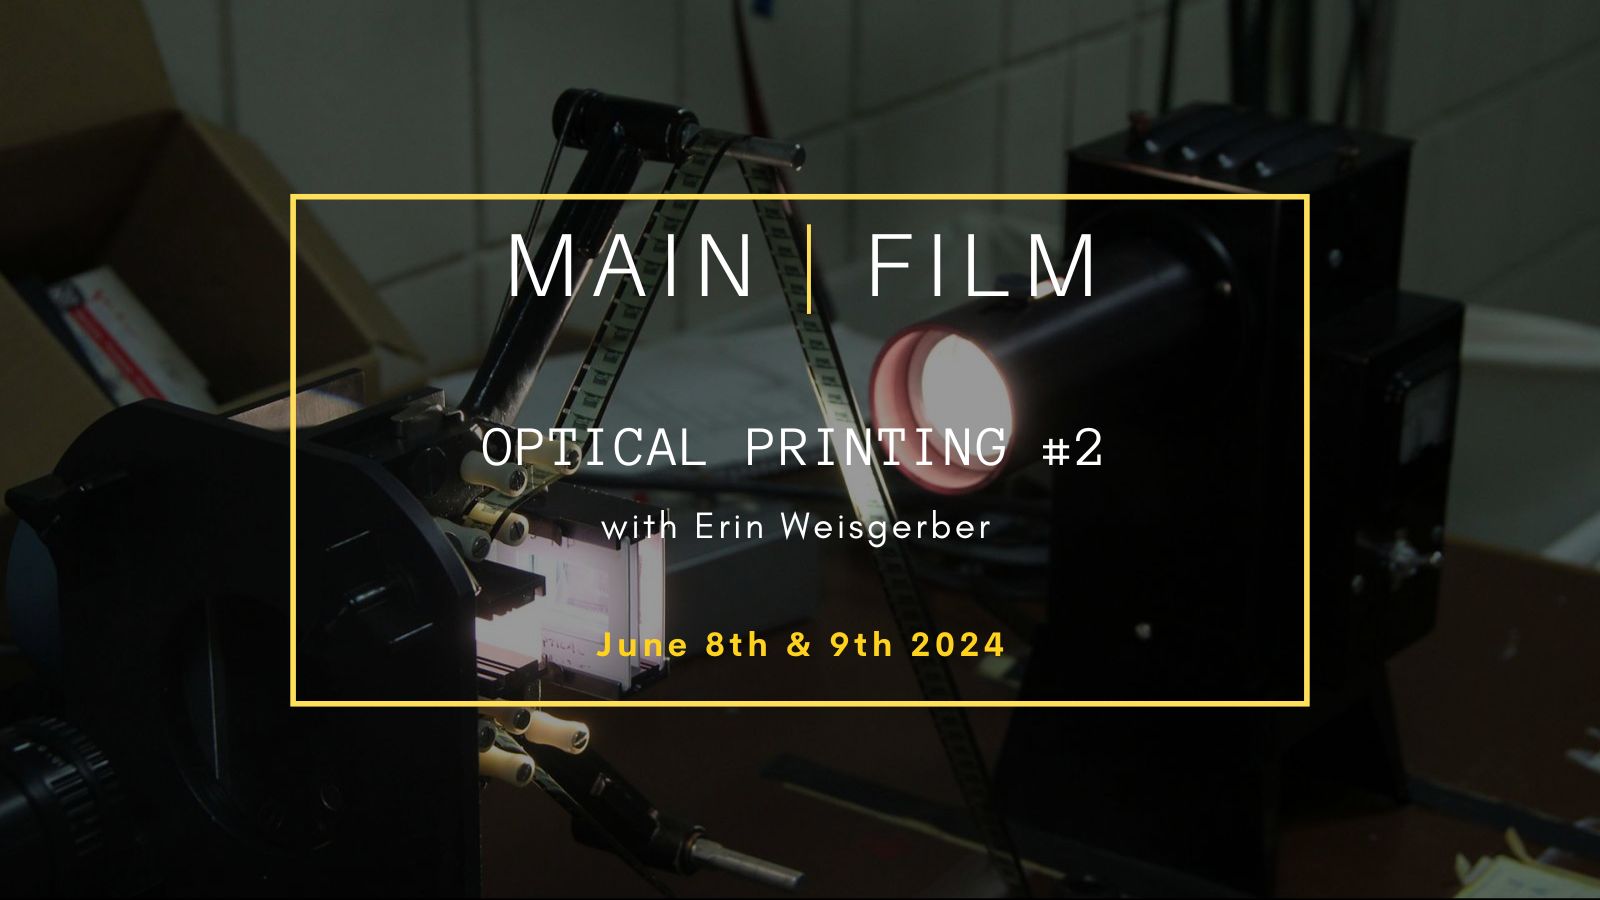 Optical printing #2